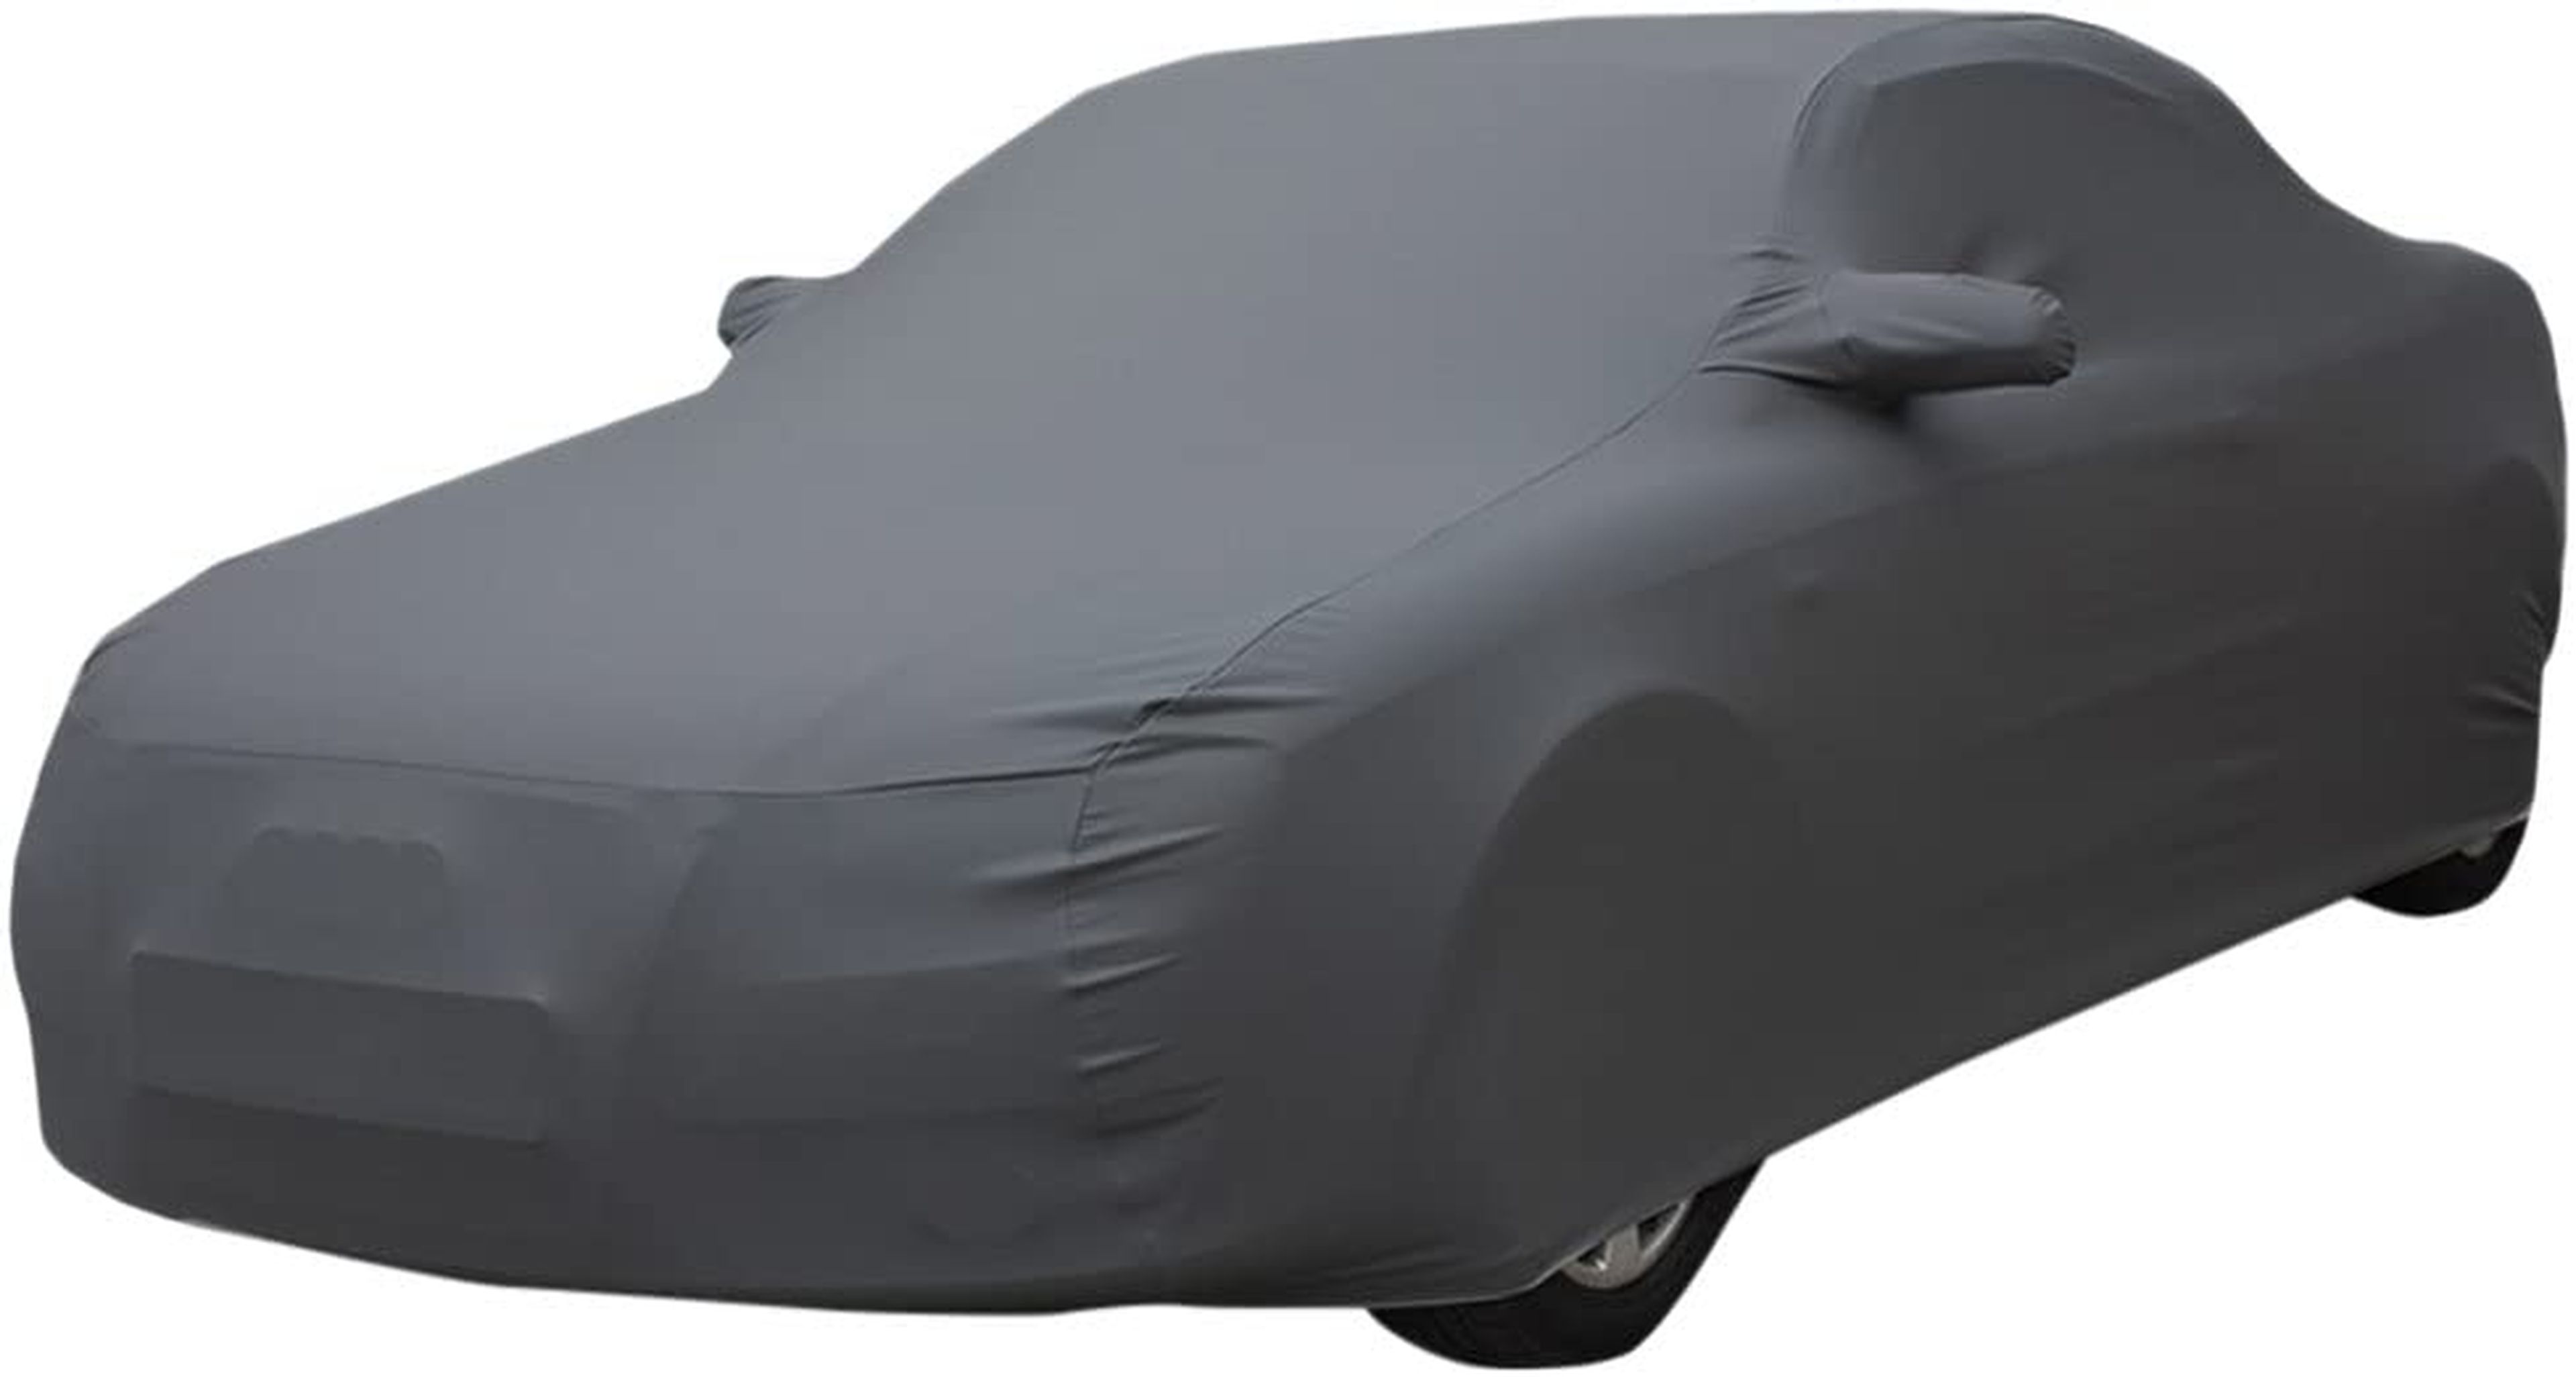 Funda exterior para coche Mobile Garage M2 Hatchback